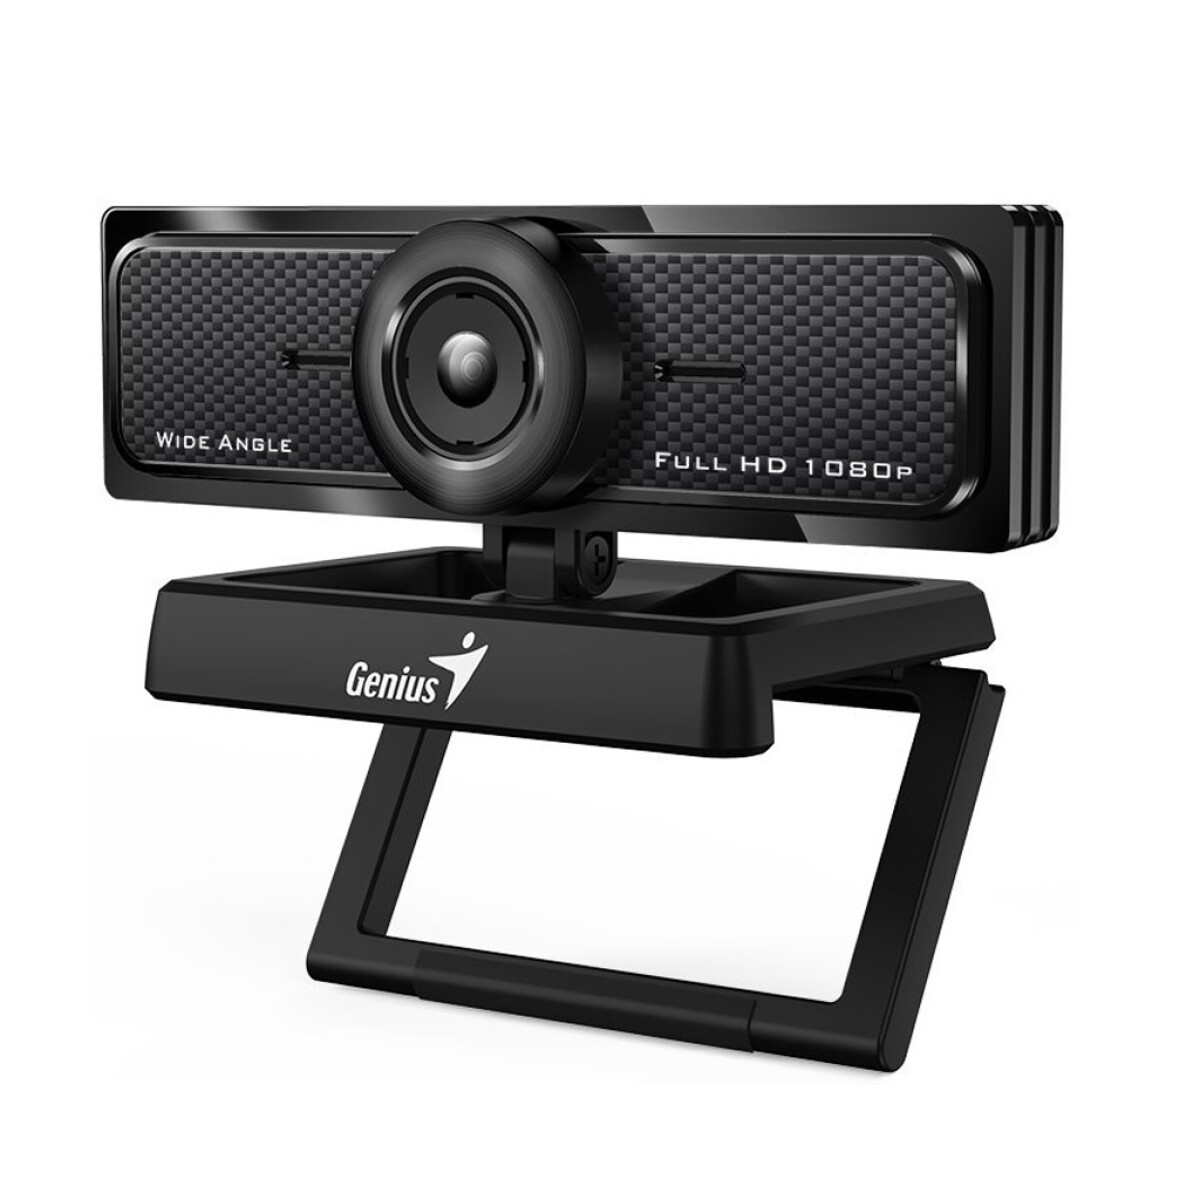 Webcam Genius F100 V2. WideCam c/ micrófono Full Hd 